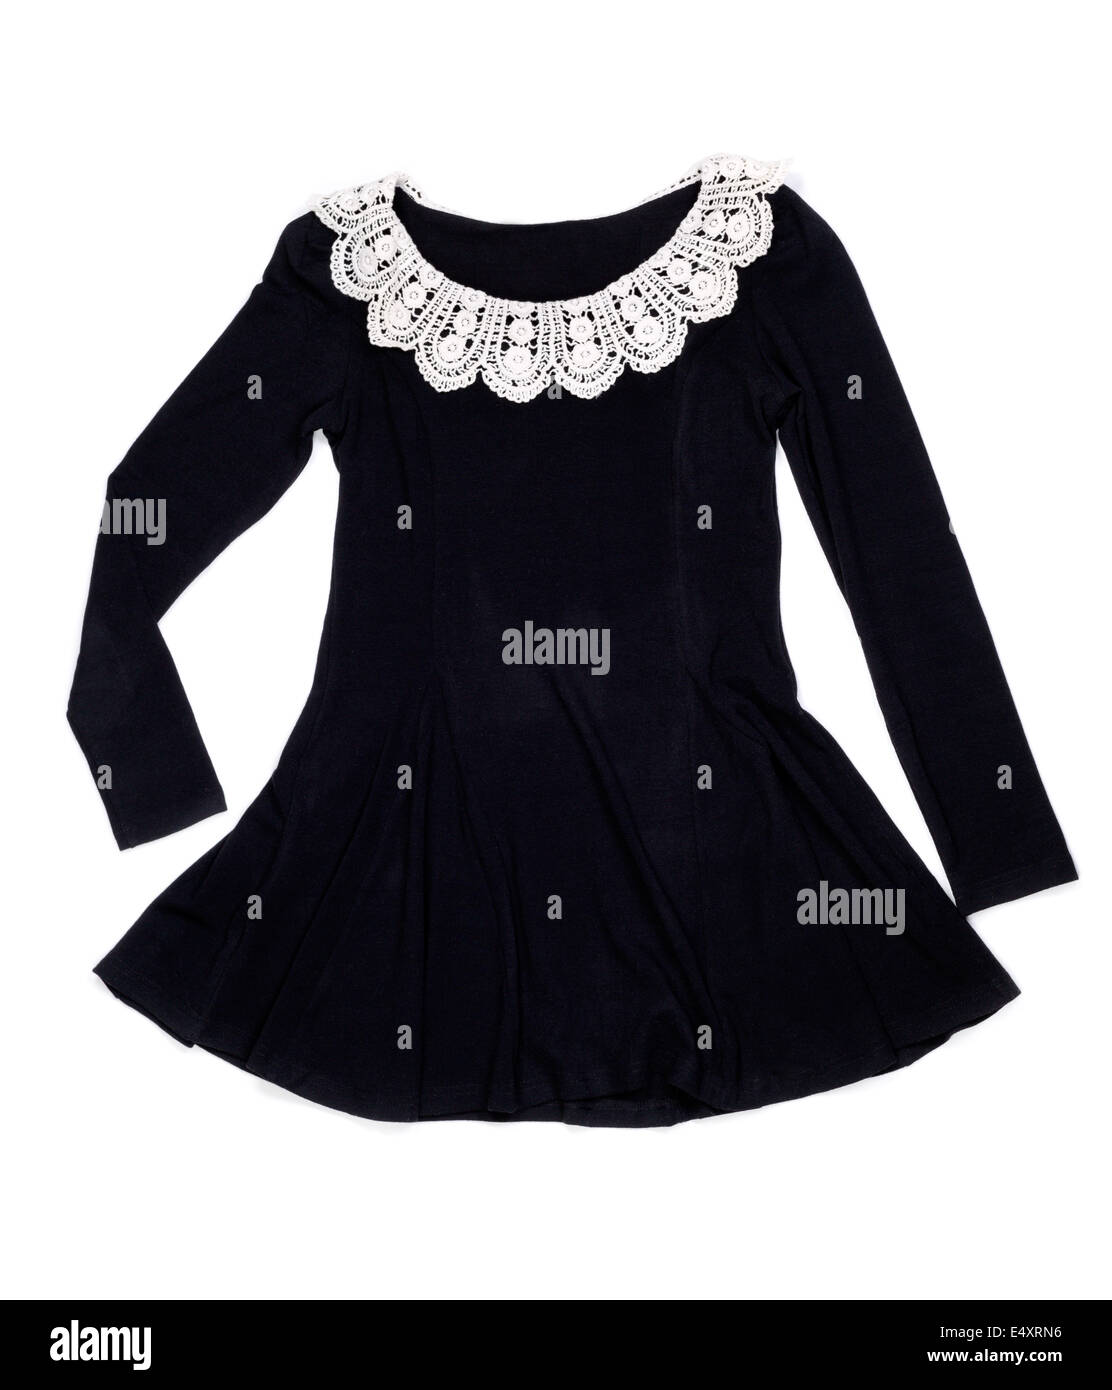 Schwarzes Kleid mit weißem Kragen Stockfotografie - Alamy